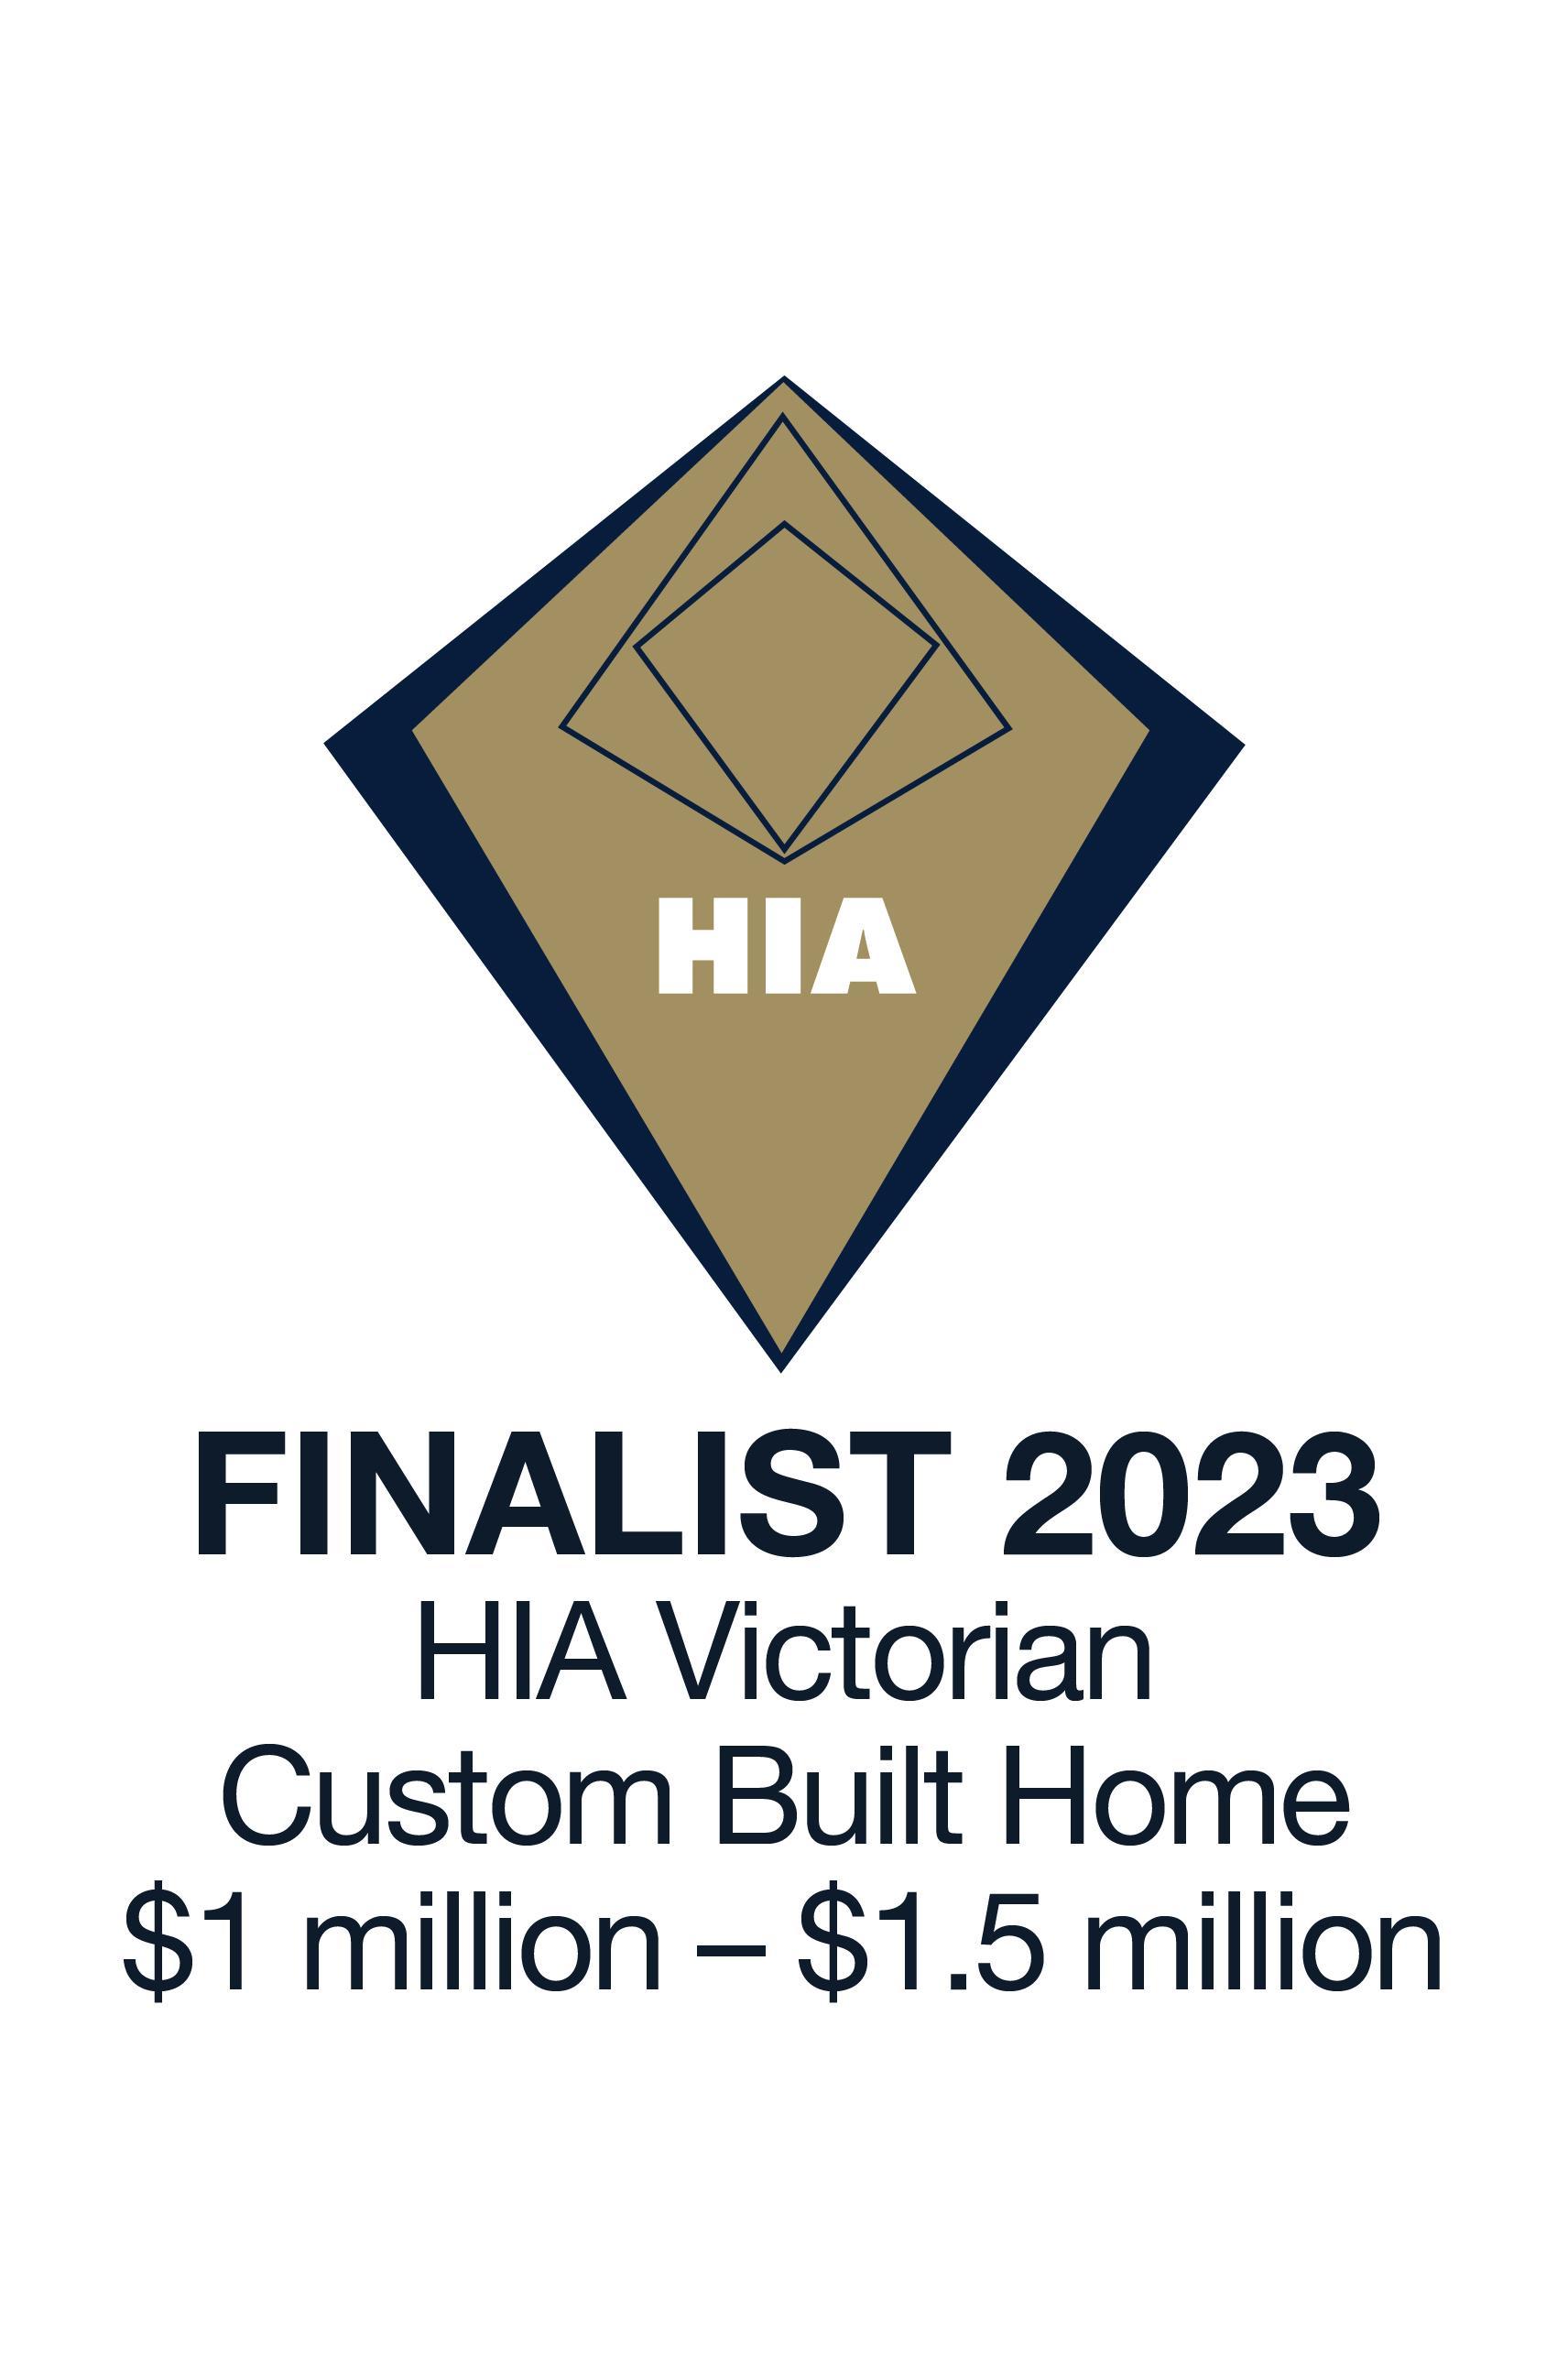 HIA Finalist Award Custom Built Home $1million - $1.5 million